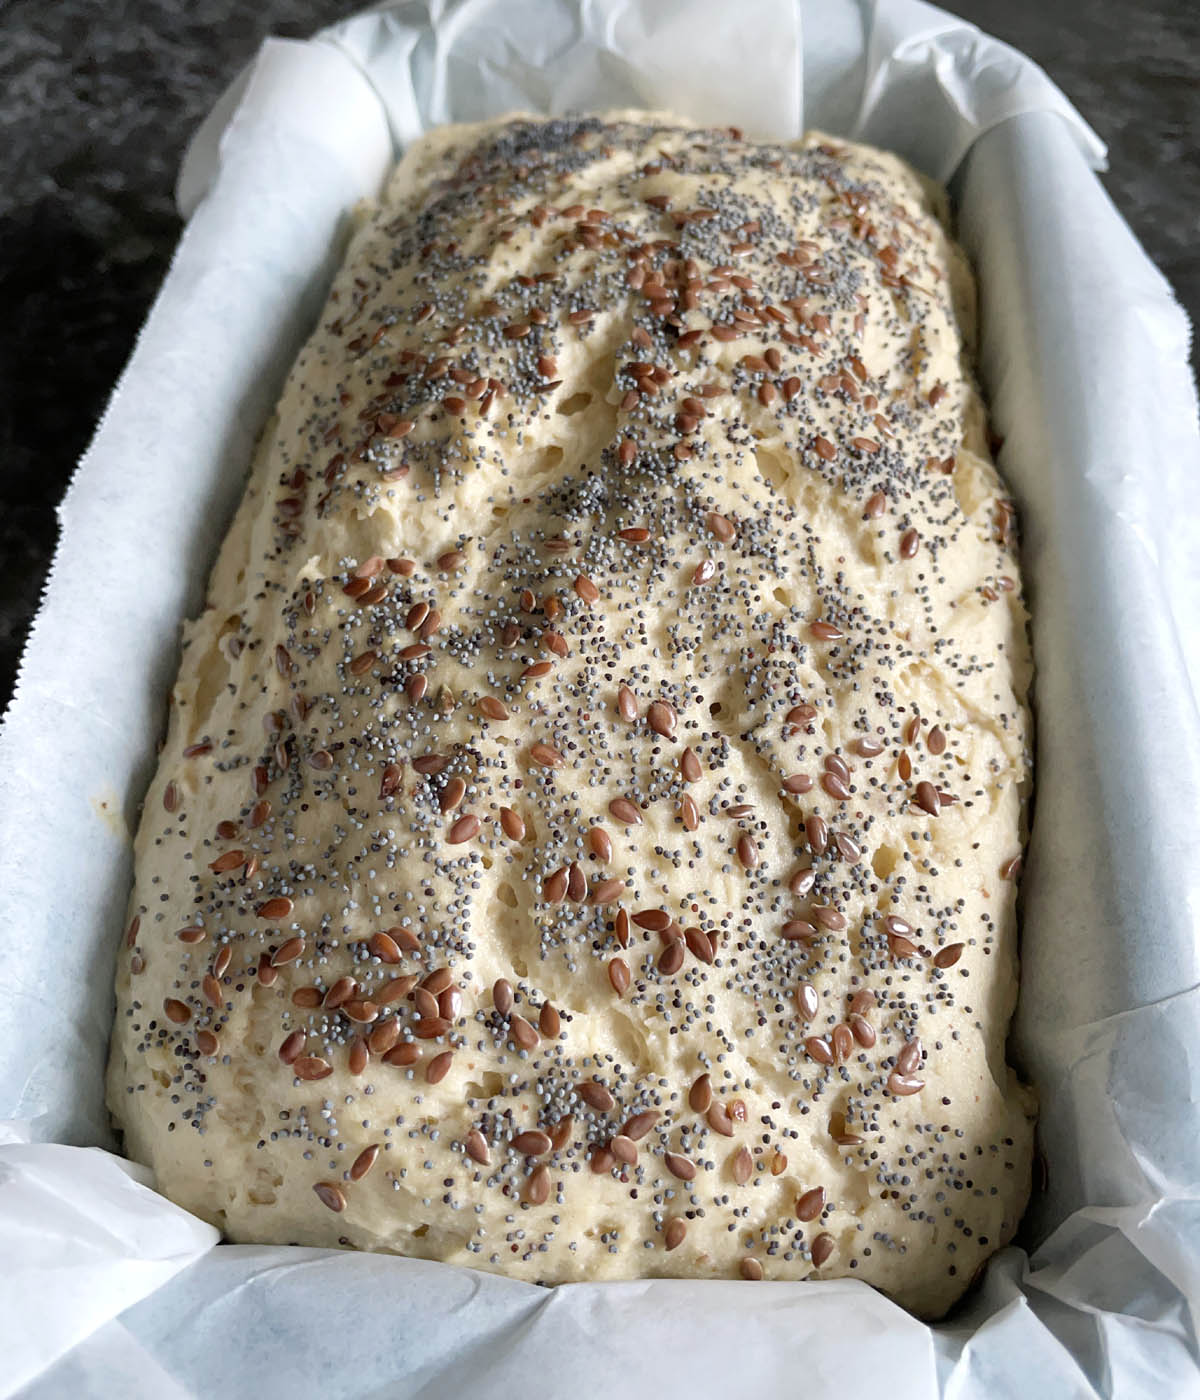 A rectangular loaf pan containing bread dough that has risen.